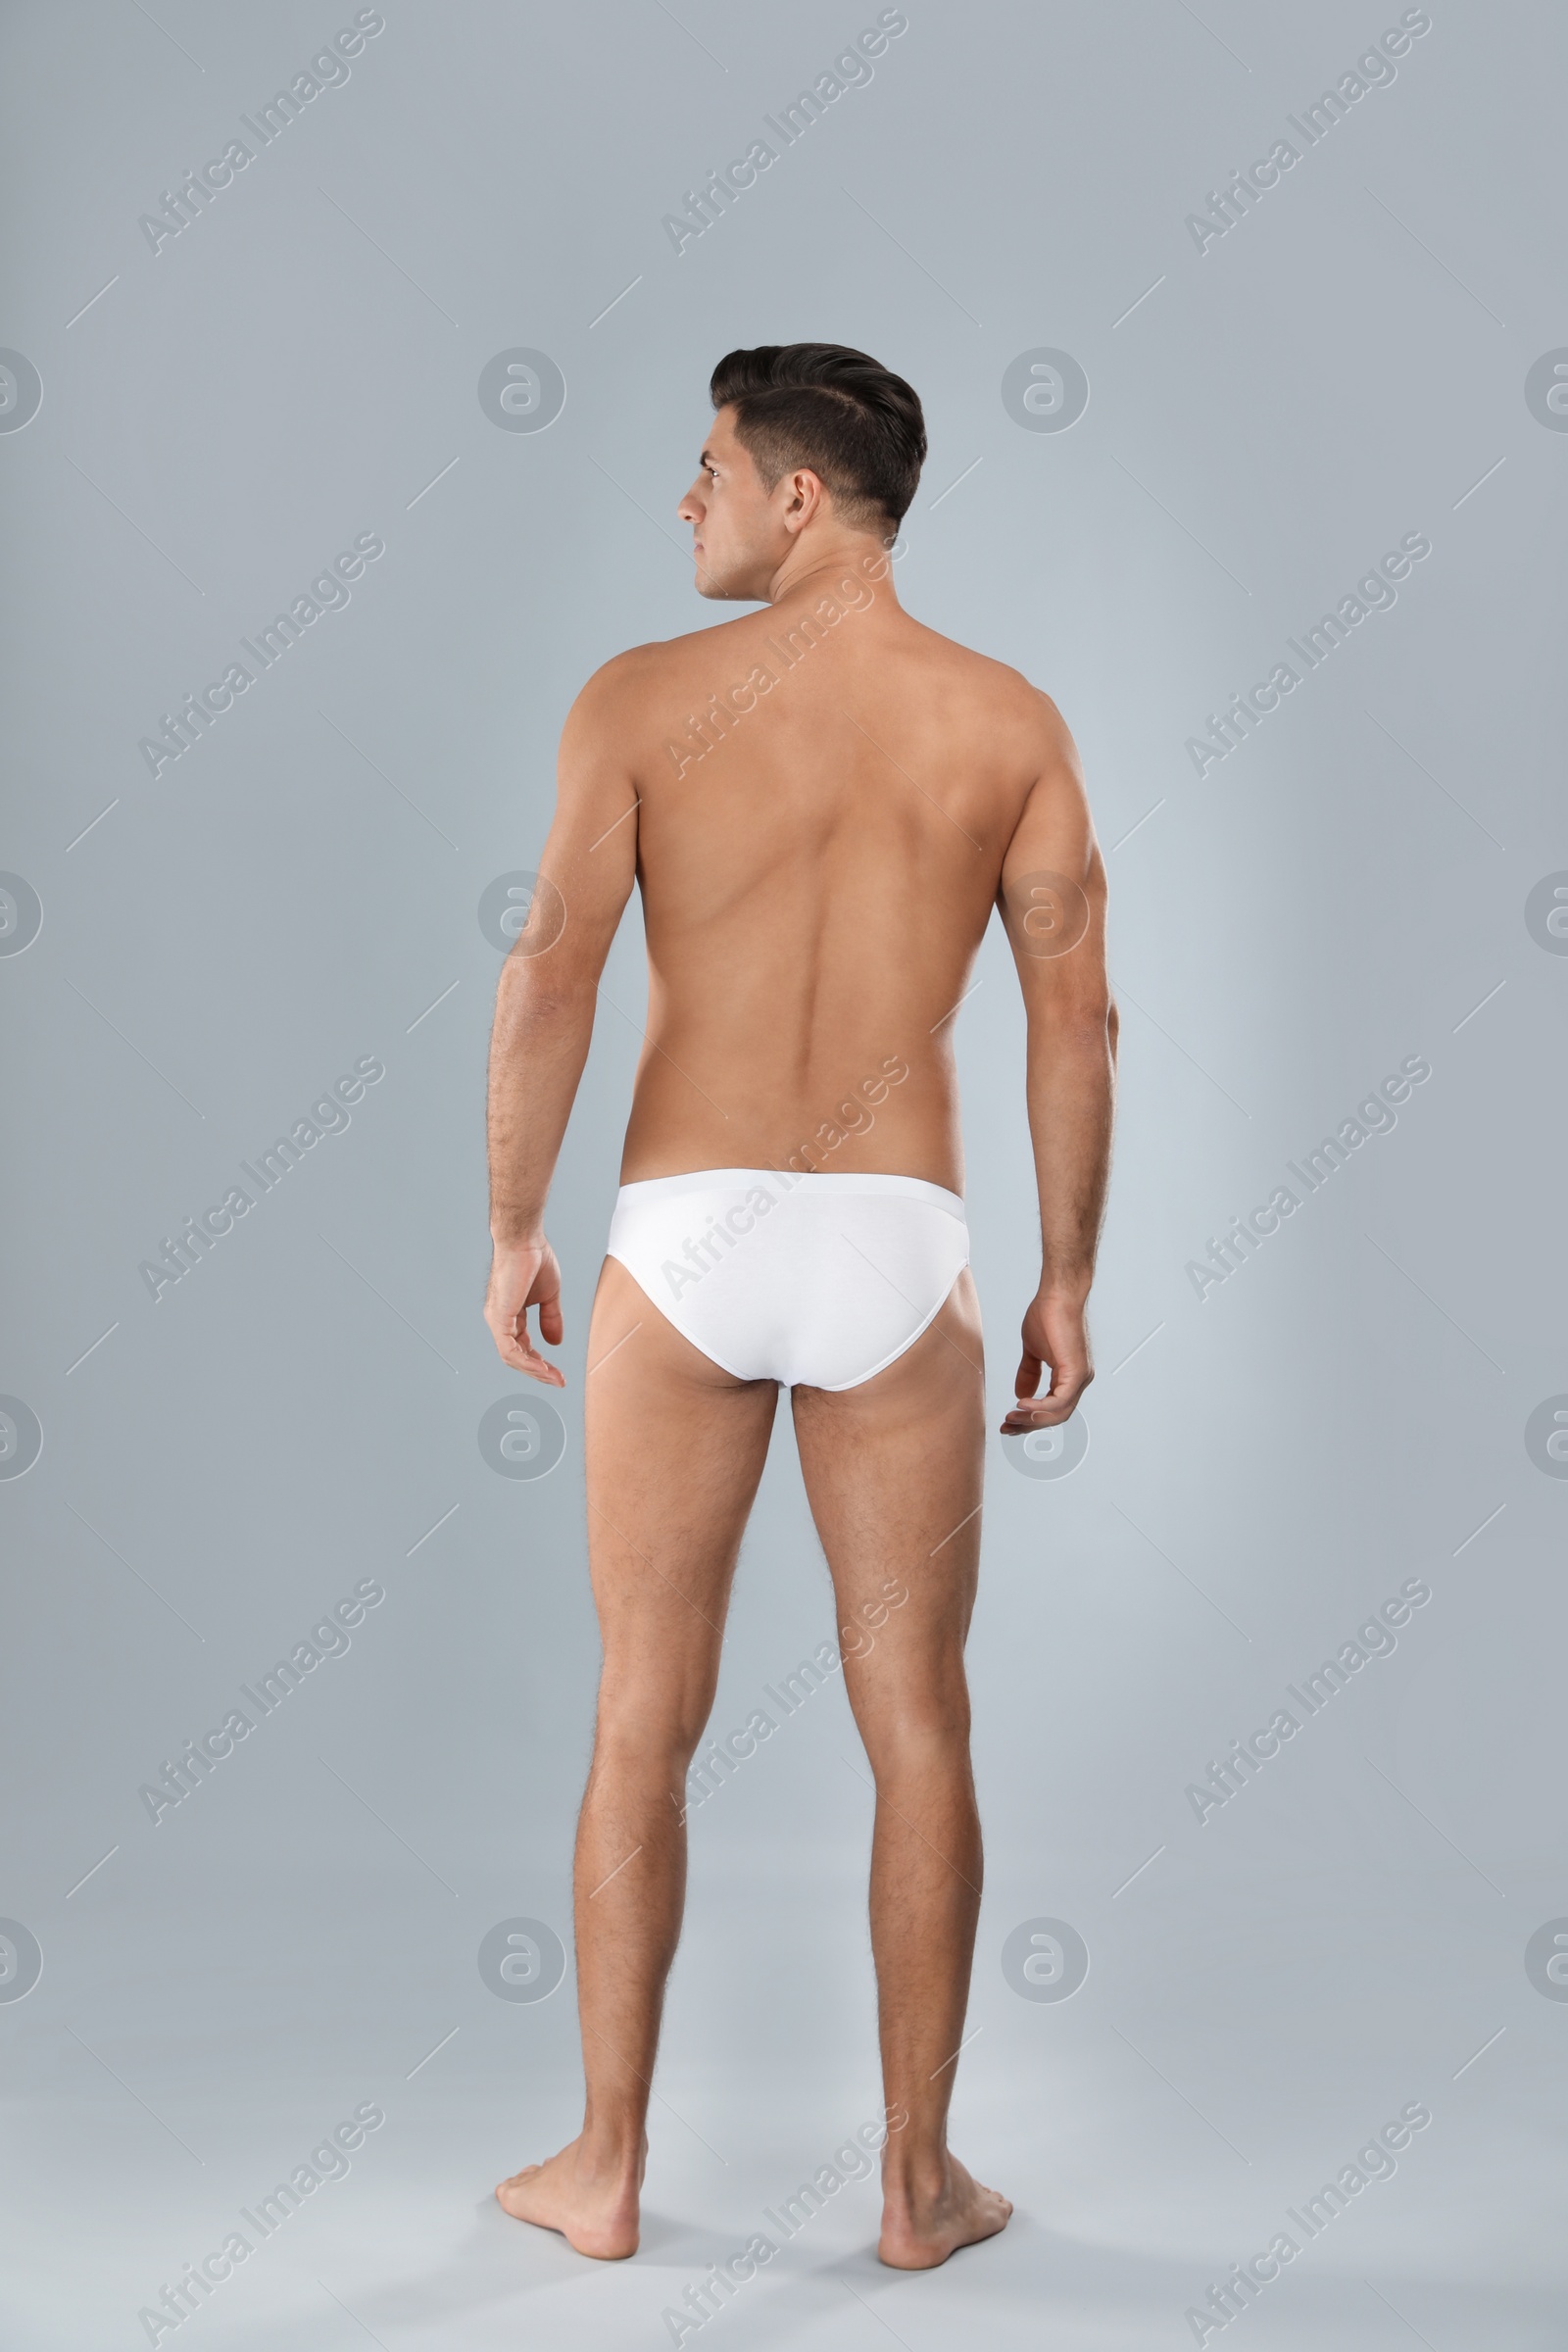 Photo of Handsome man in white underwear on light grey background, back view